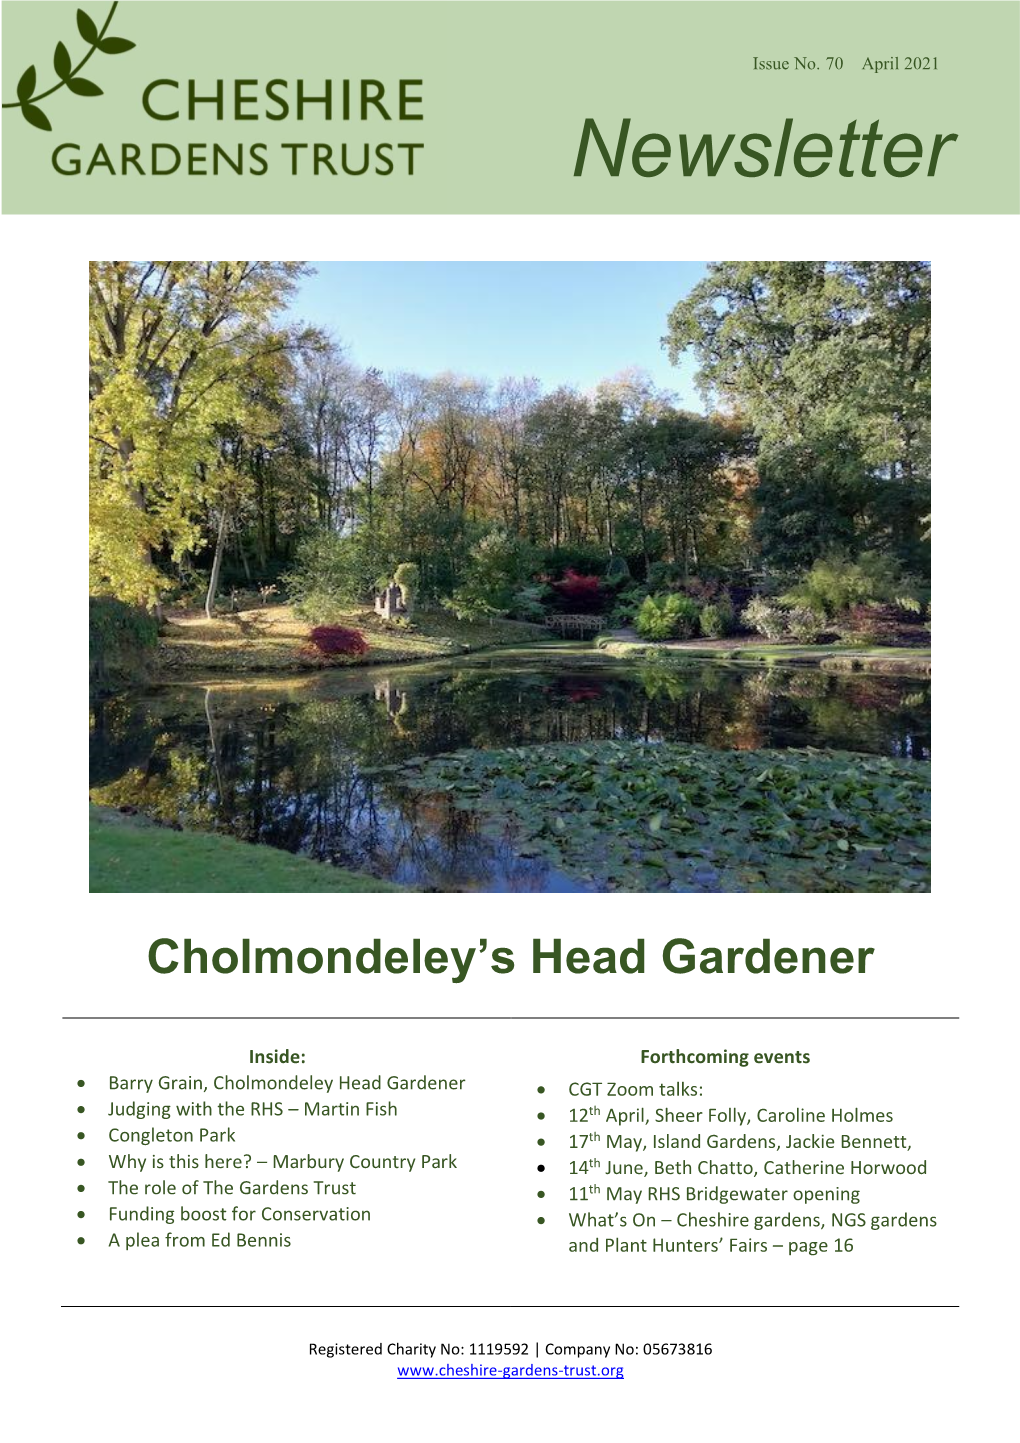 Cholmondeley's Head Gardener